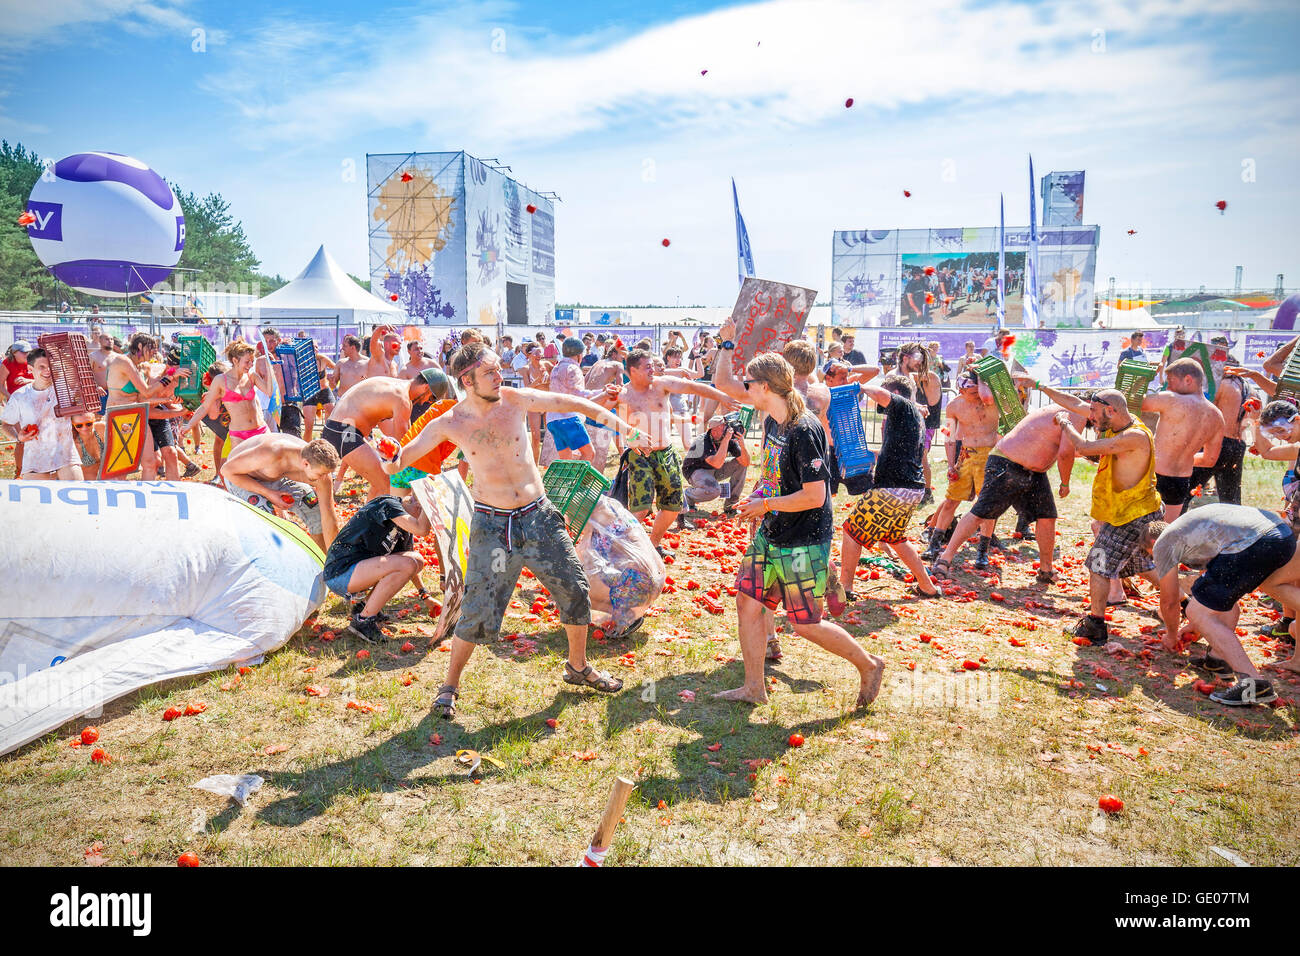 Tomato fight on the 21th Woodstock Festival Poland (Przystanek Woodstock). Stock Photo